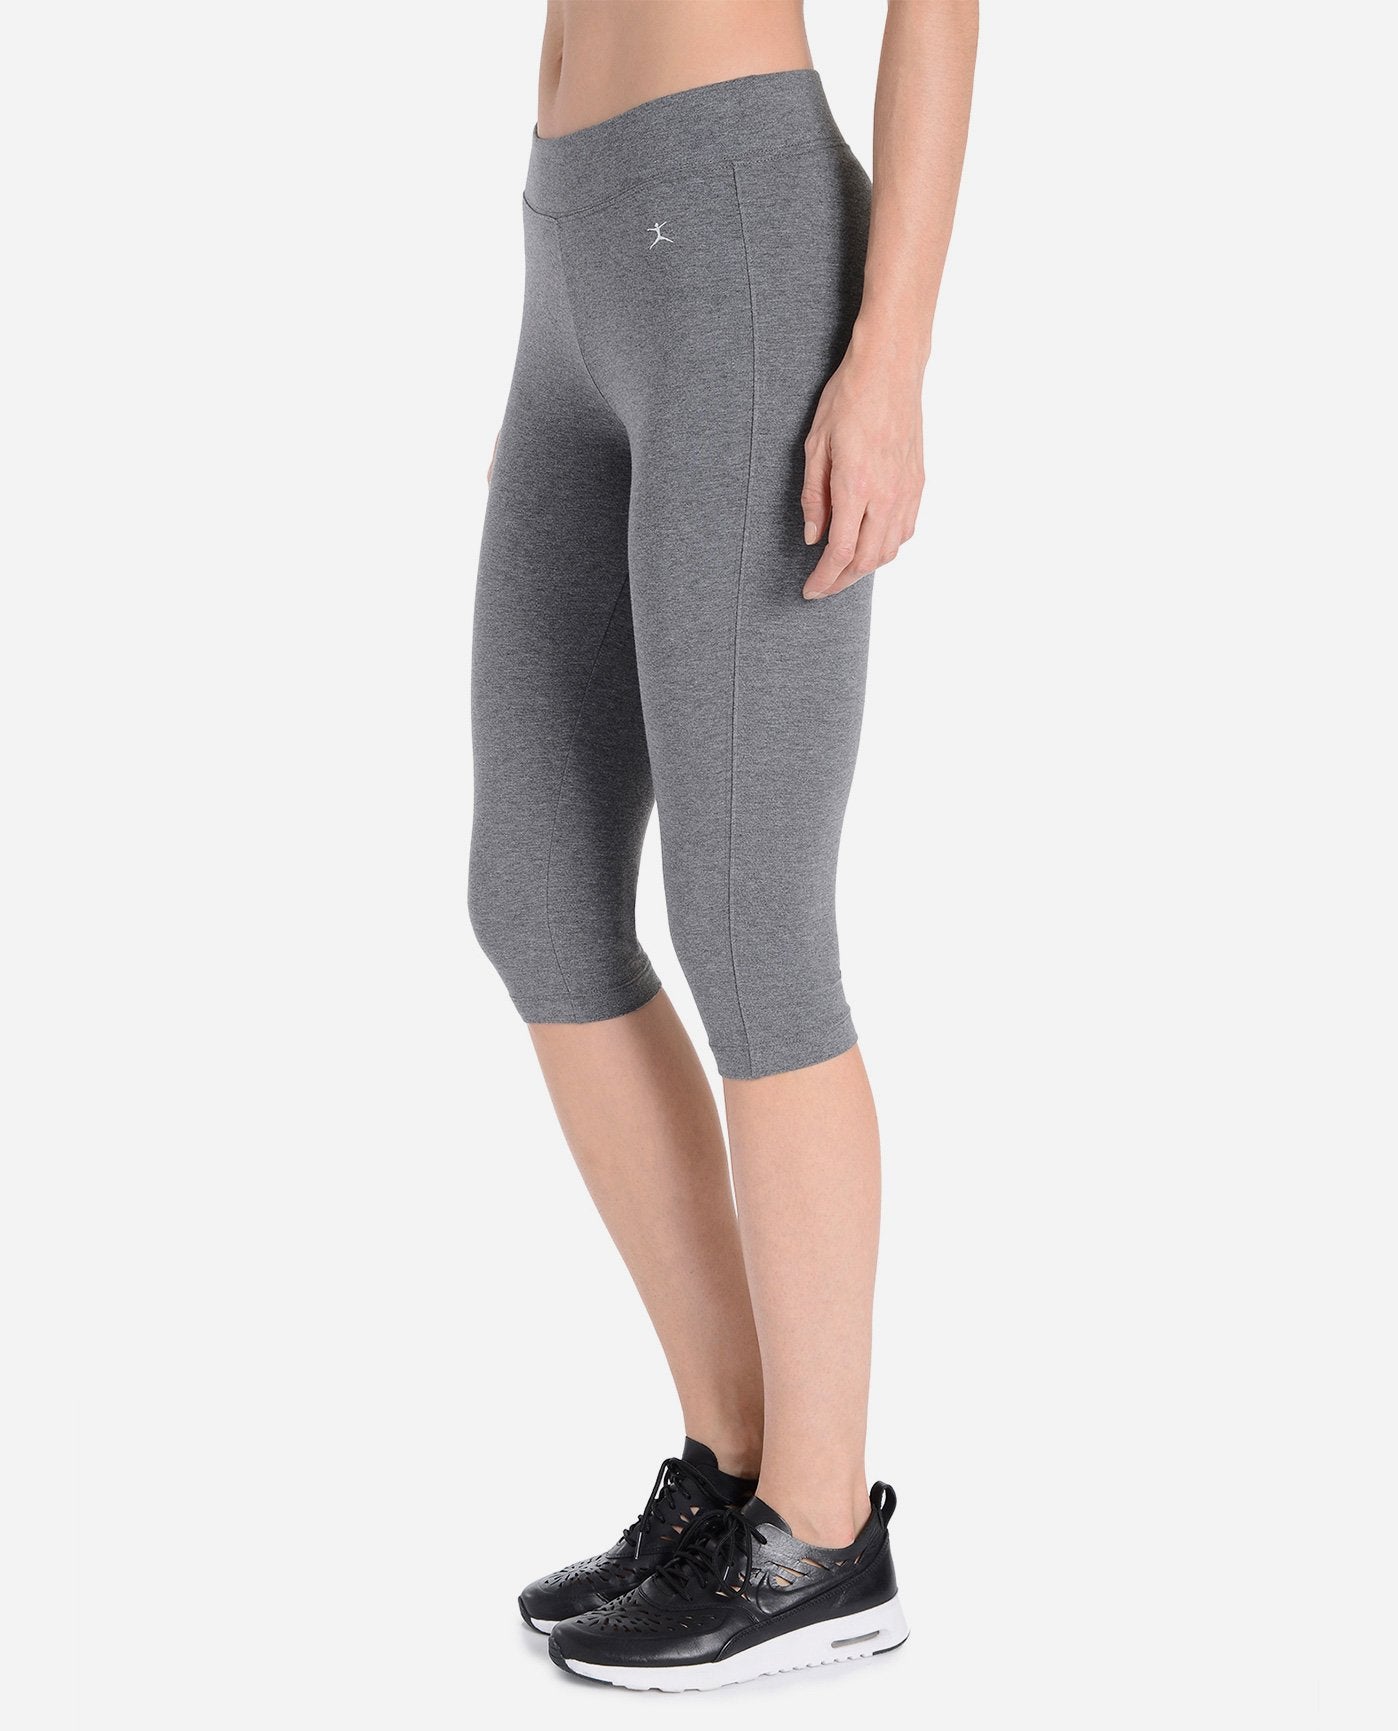 Danskin Now, Pants & Jumpsuits, Danskin Now Women Cropped Stretchy Basic  Capri Fitted Leggings Gray Sch46